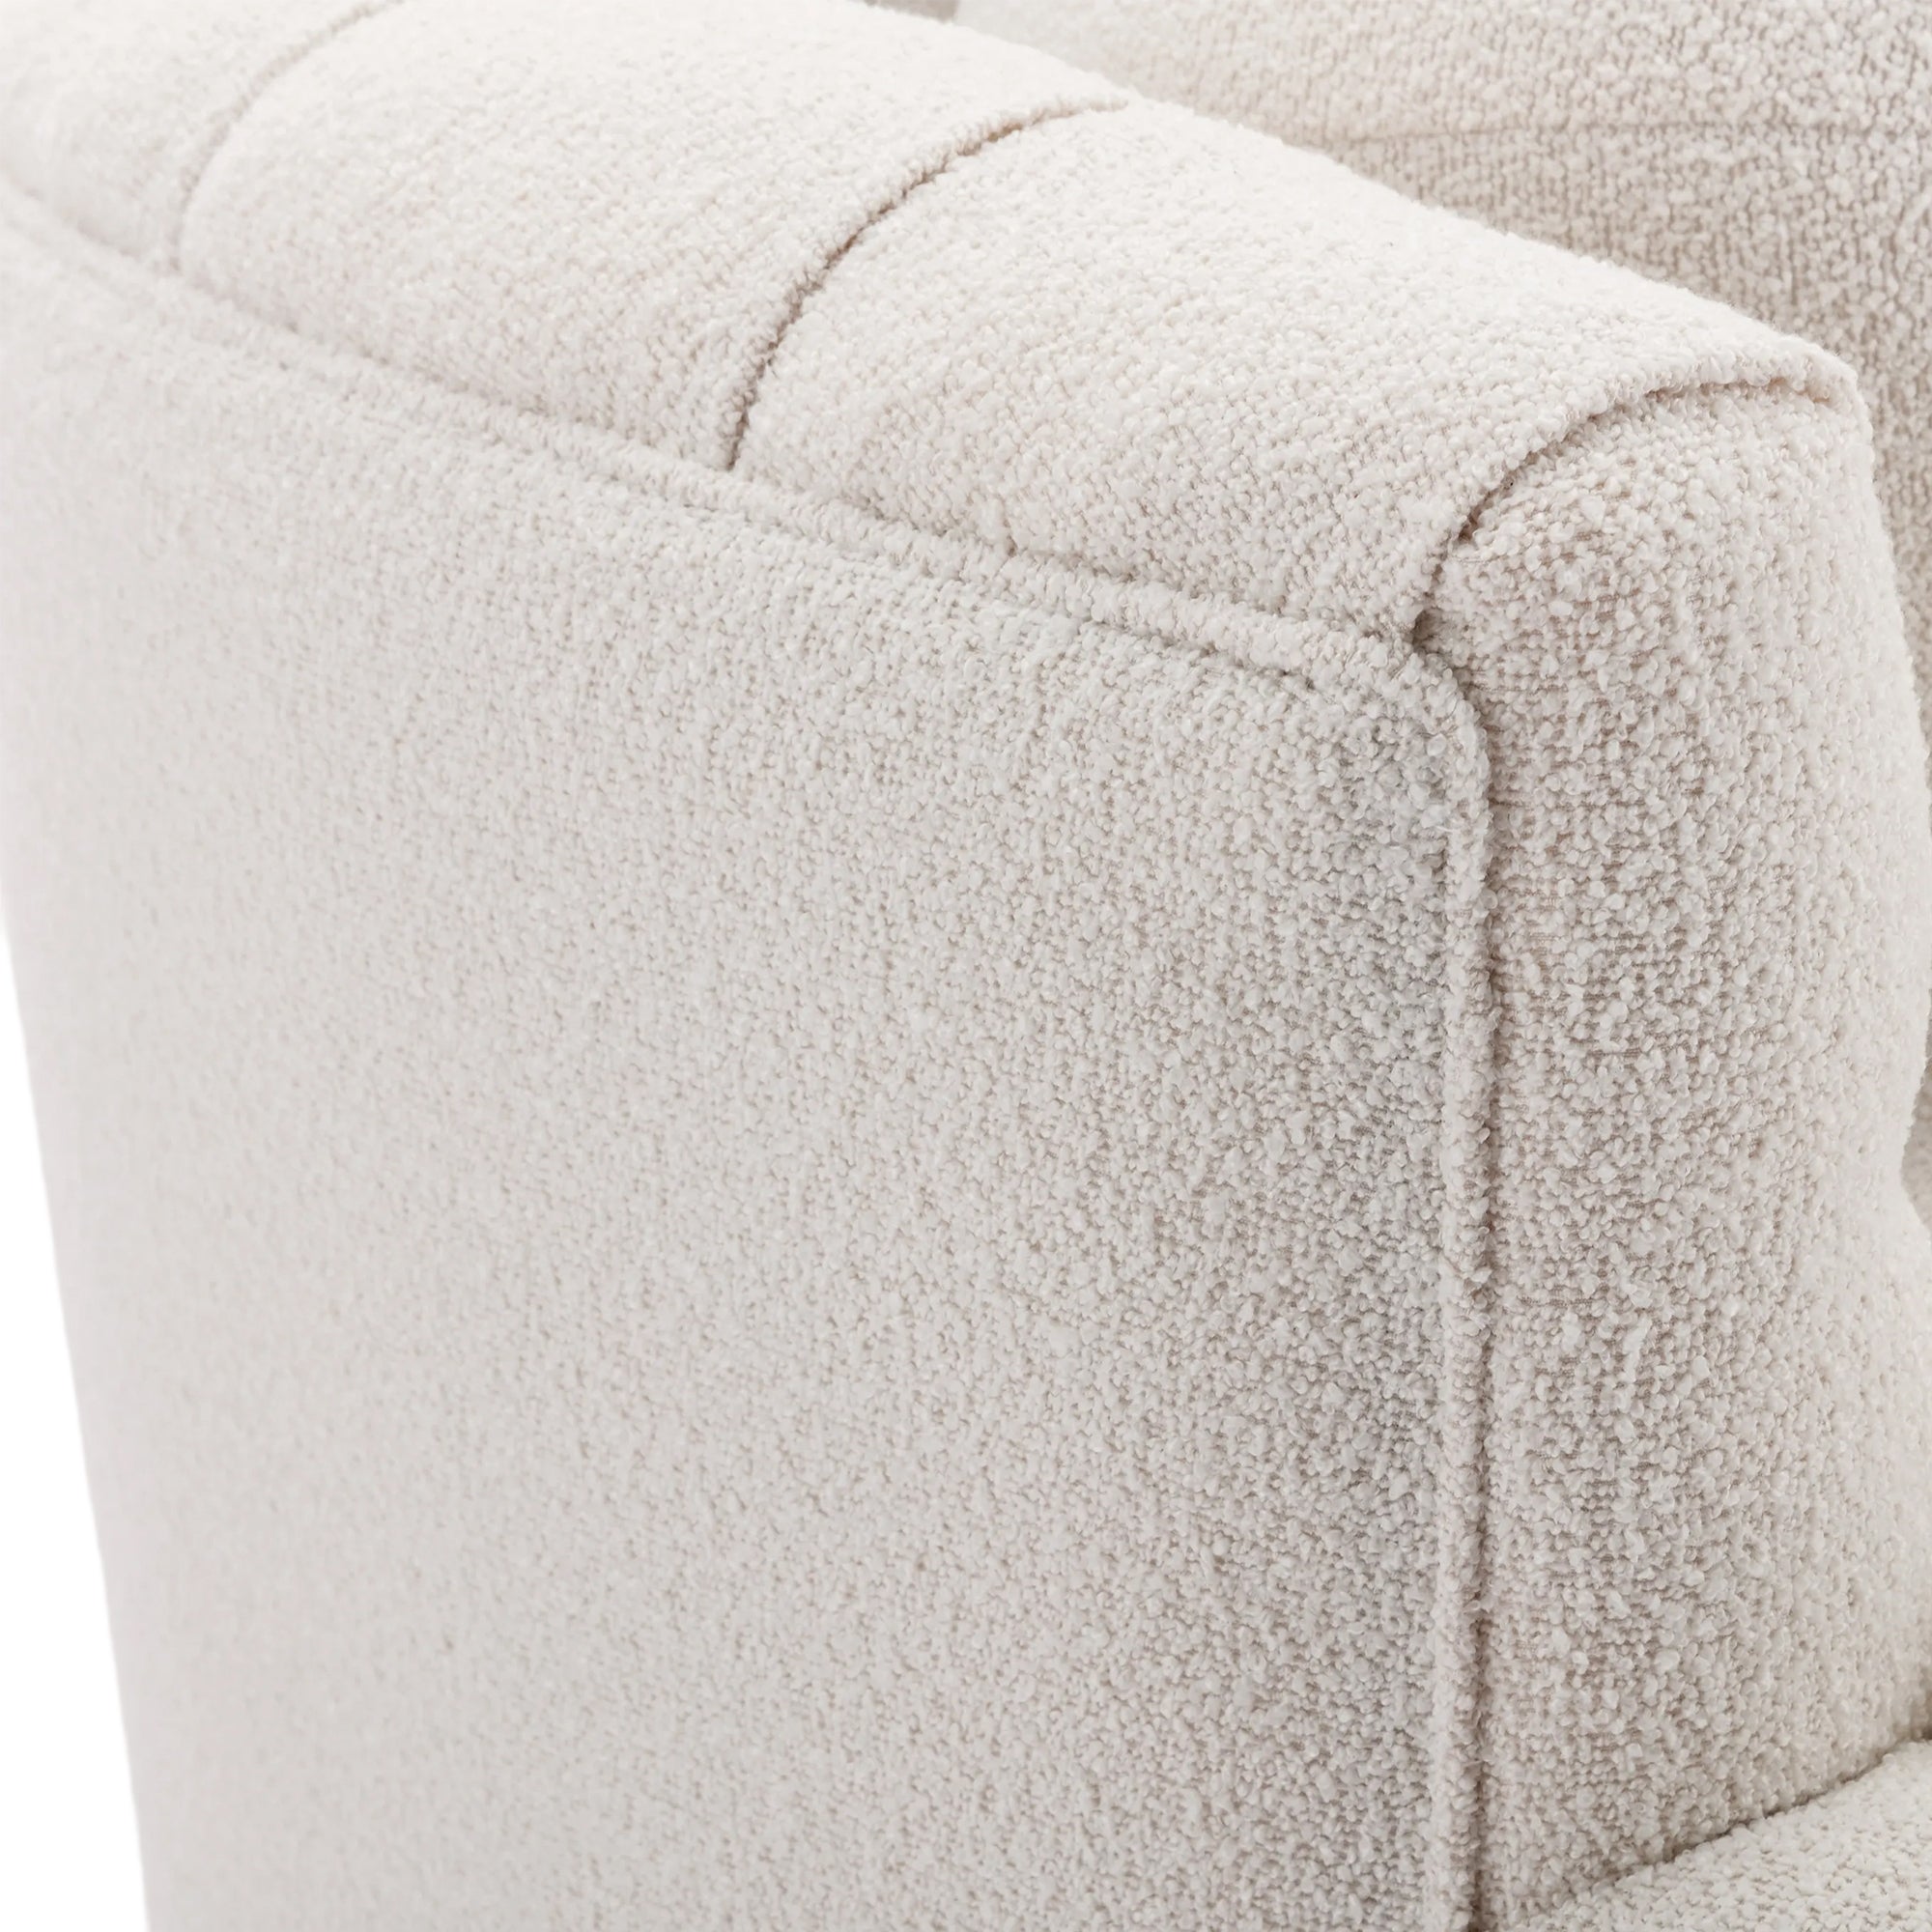 COOLMORE Modern swivel accent chair barrel chair for beige-linen